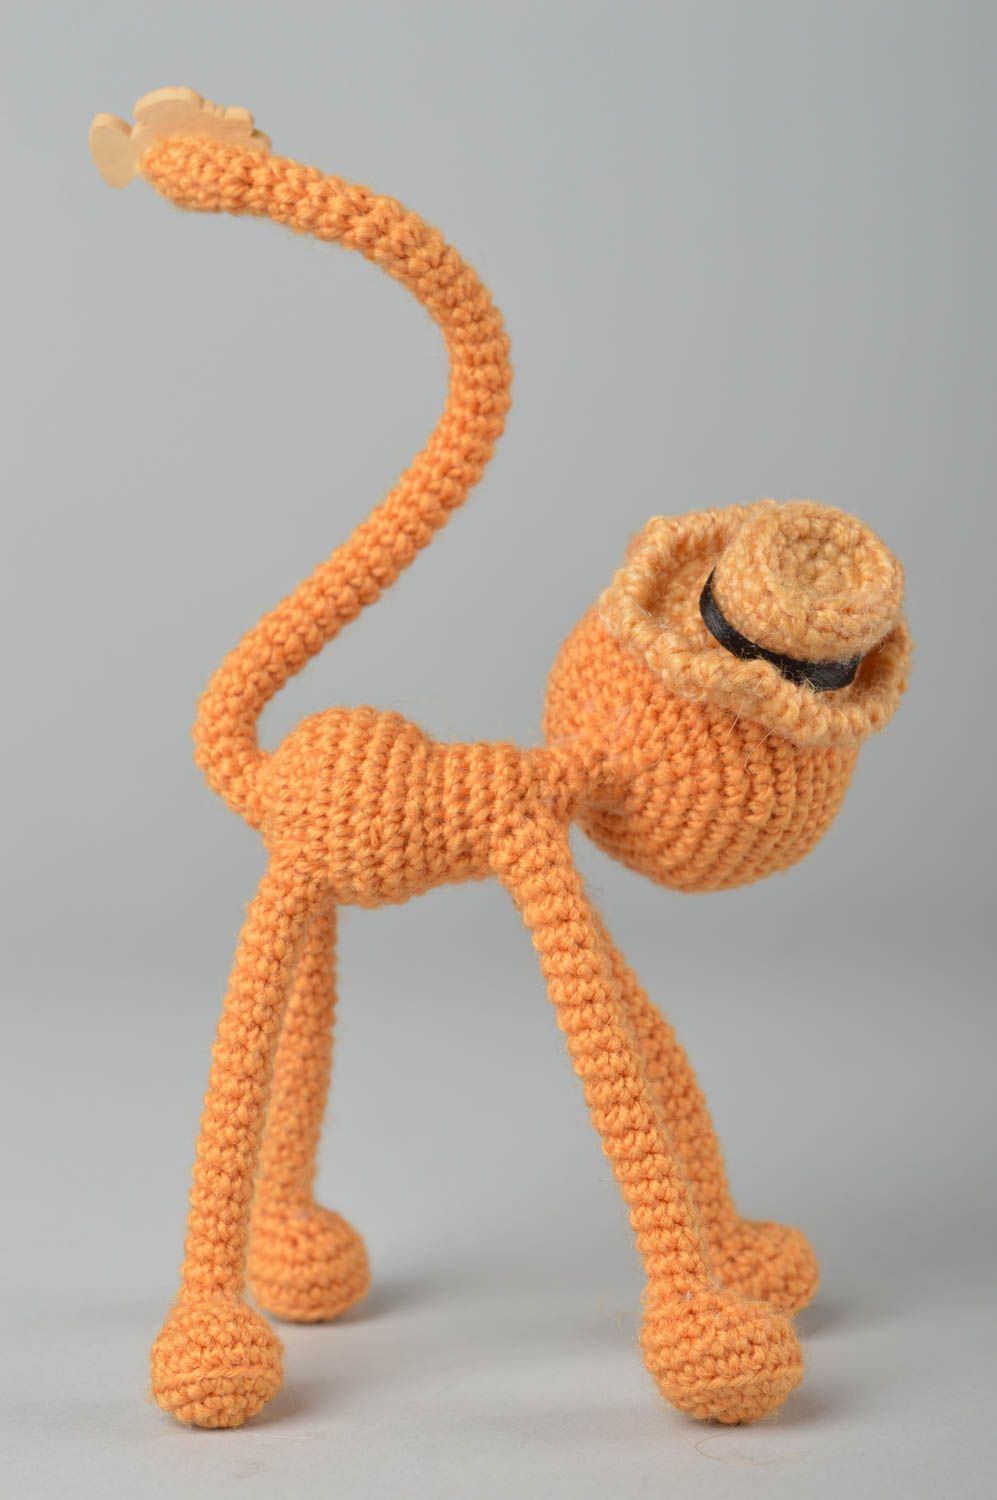 Hand-crocheted creative toy handmade crocheted toy for babies nursery decor photo 4